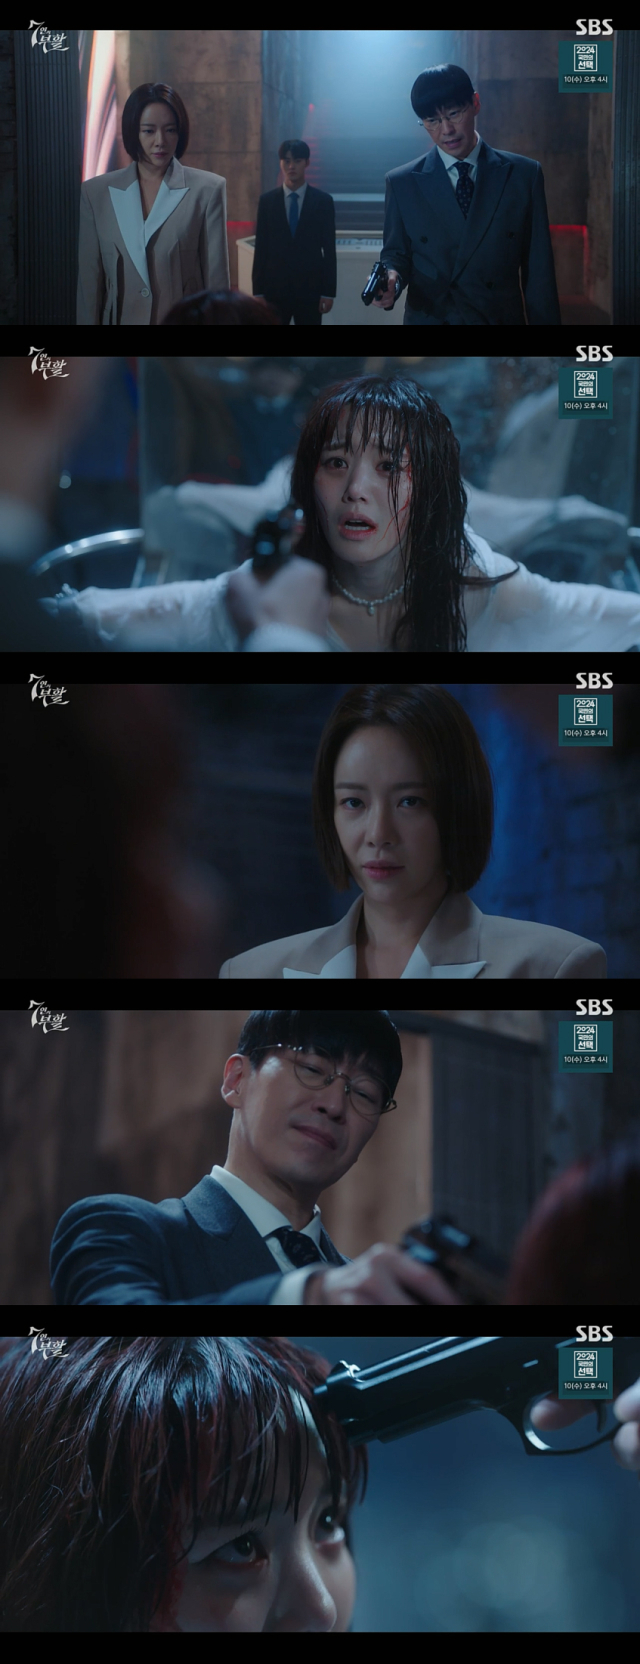 SBS 금토드라마 '7인의 부활'./SBS 금토드라마 '7인의 부활' 방송 캡처